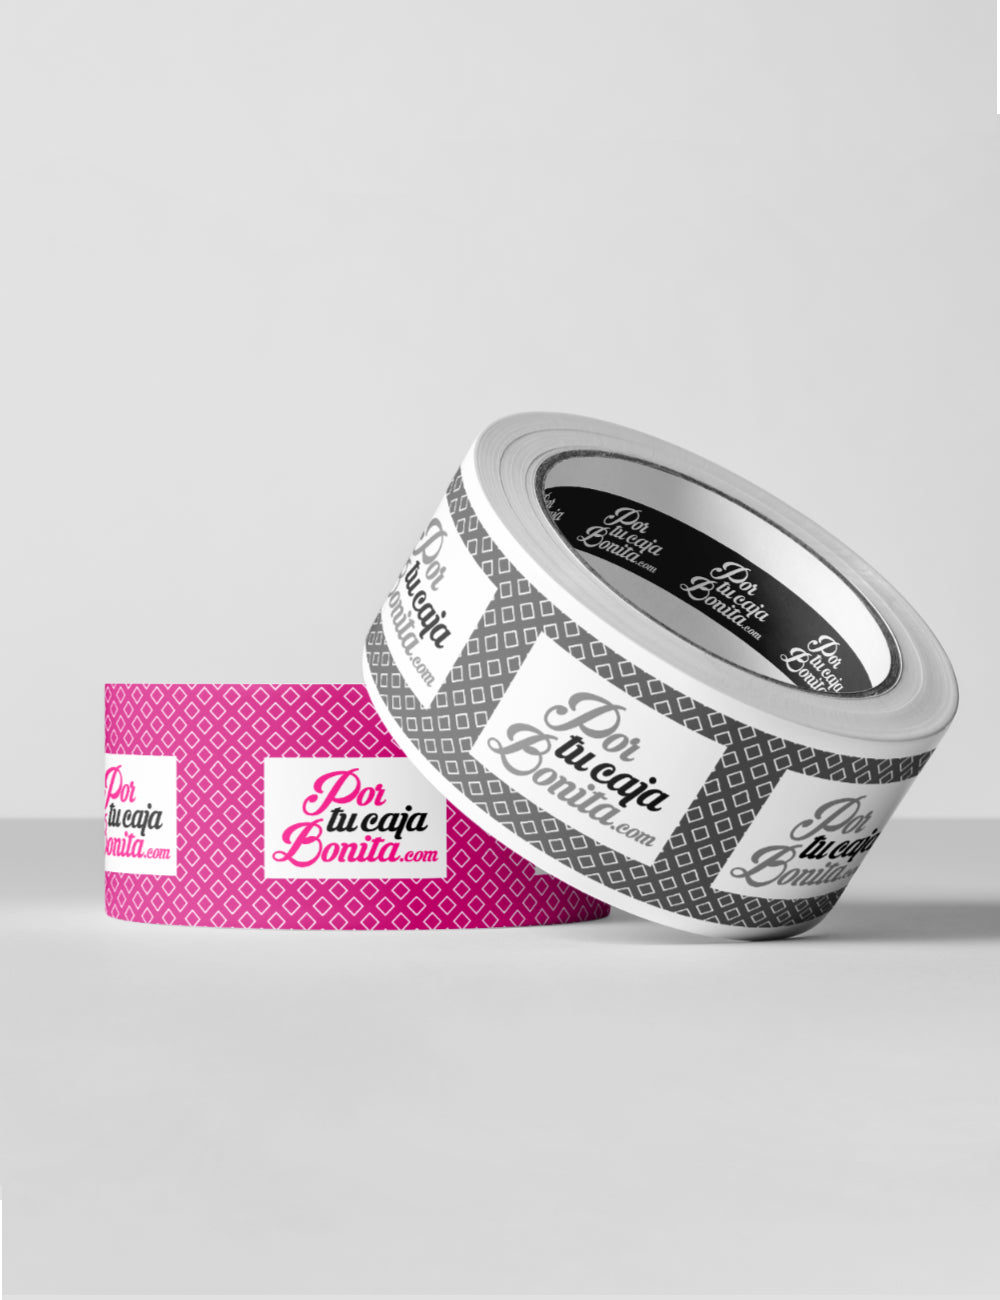 Cinta adhesiva personalizada – Por tu caja bonita